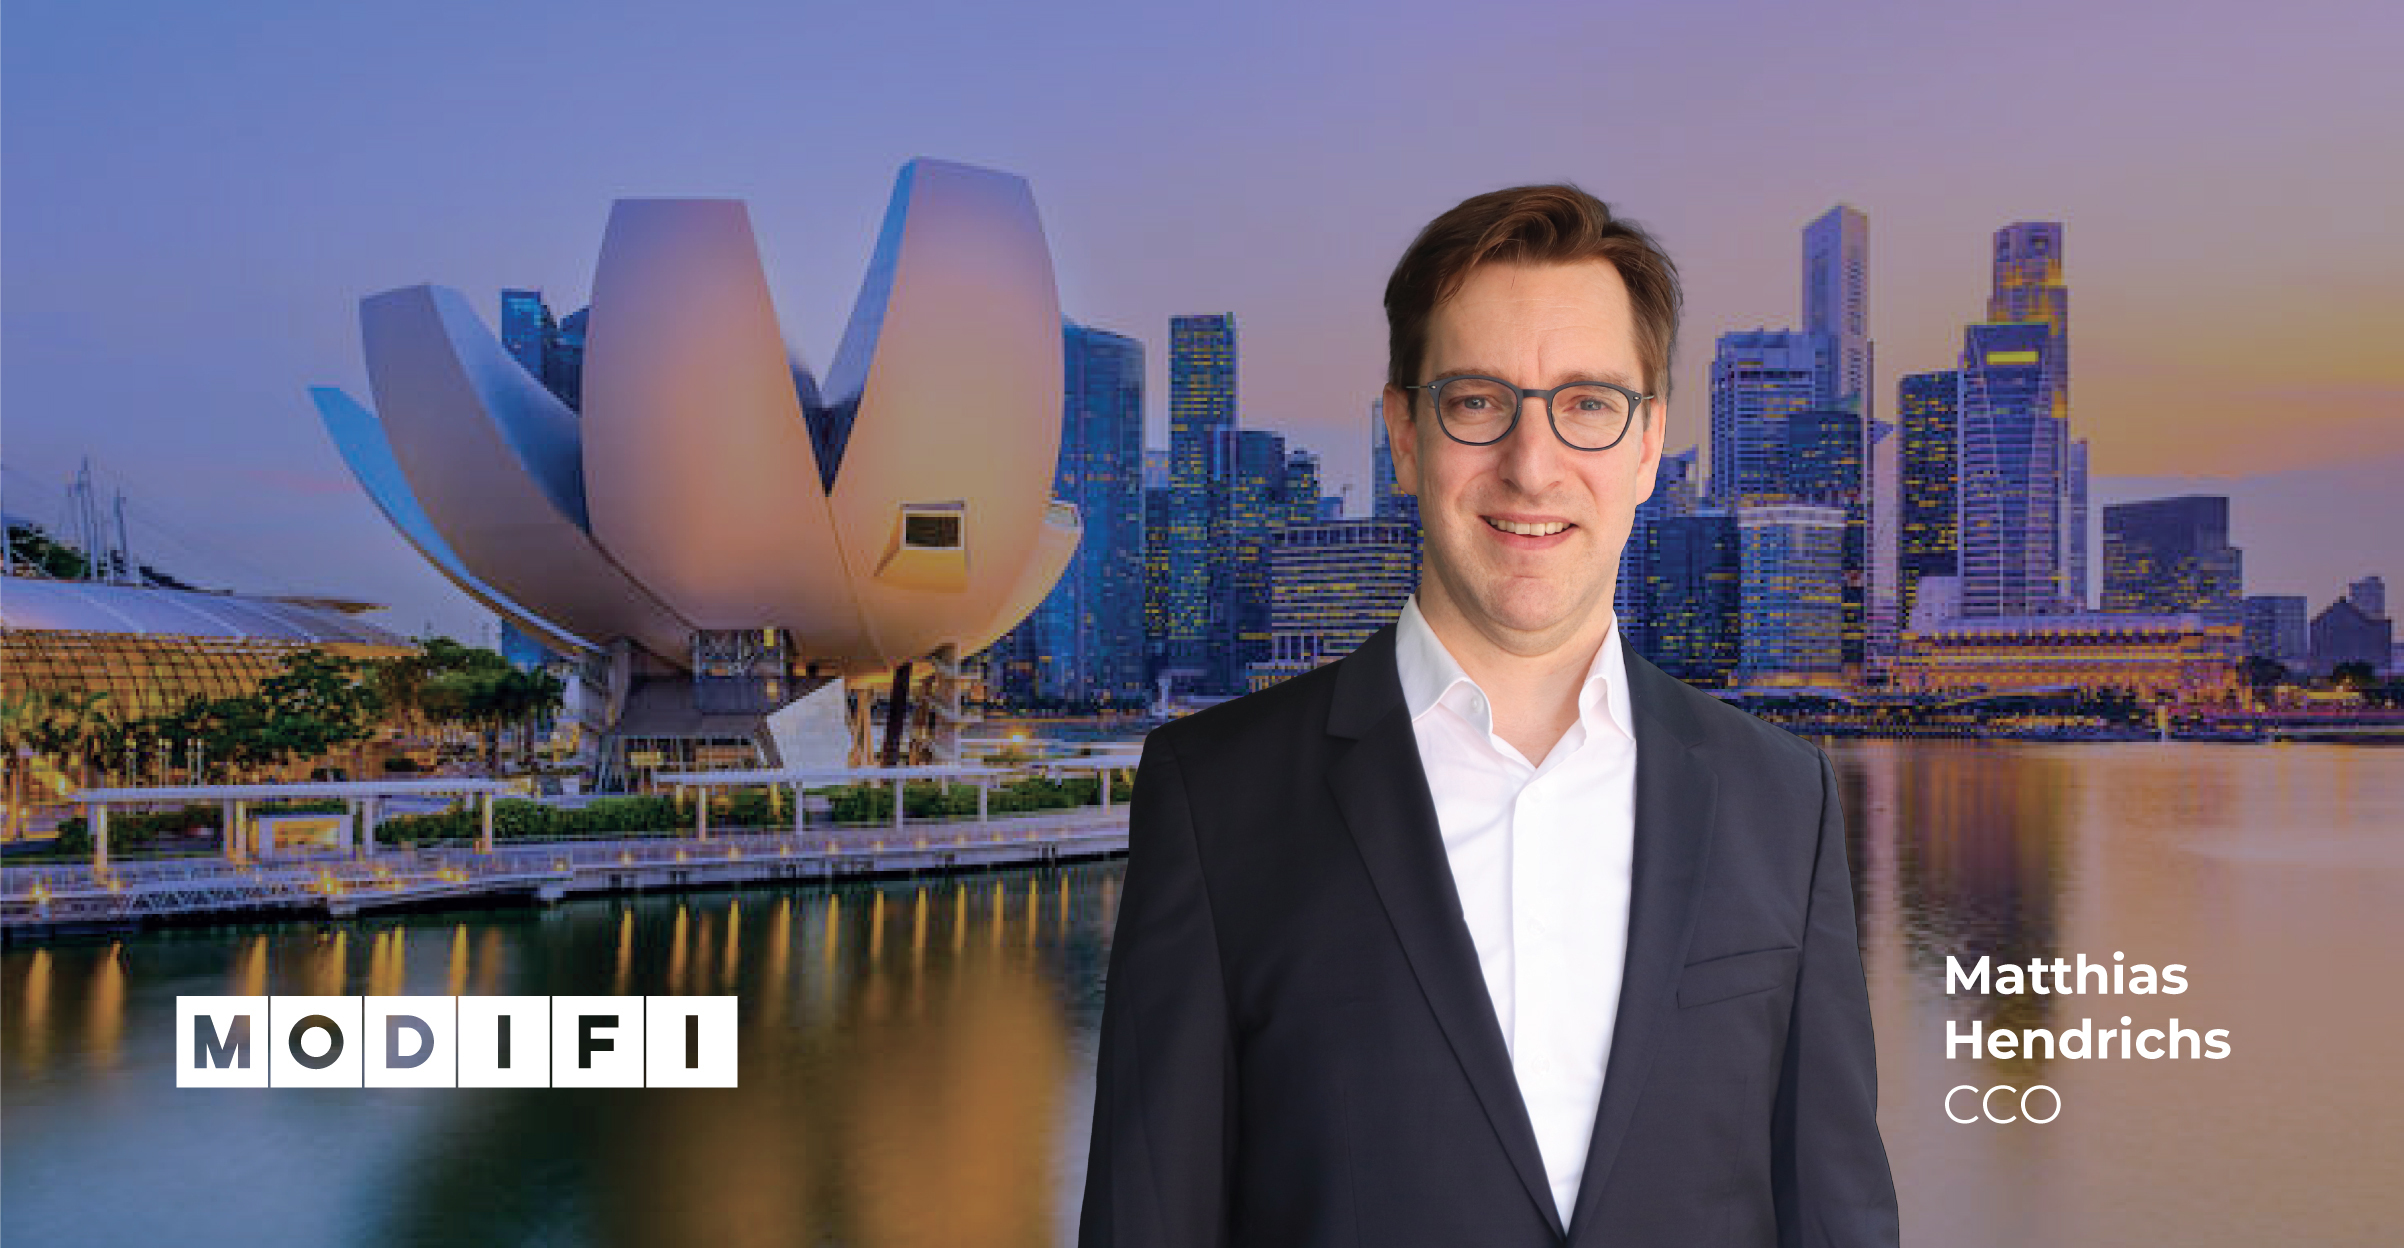 MODIFI Expands Its Footprint to Singapore